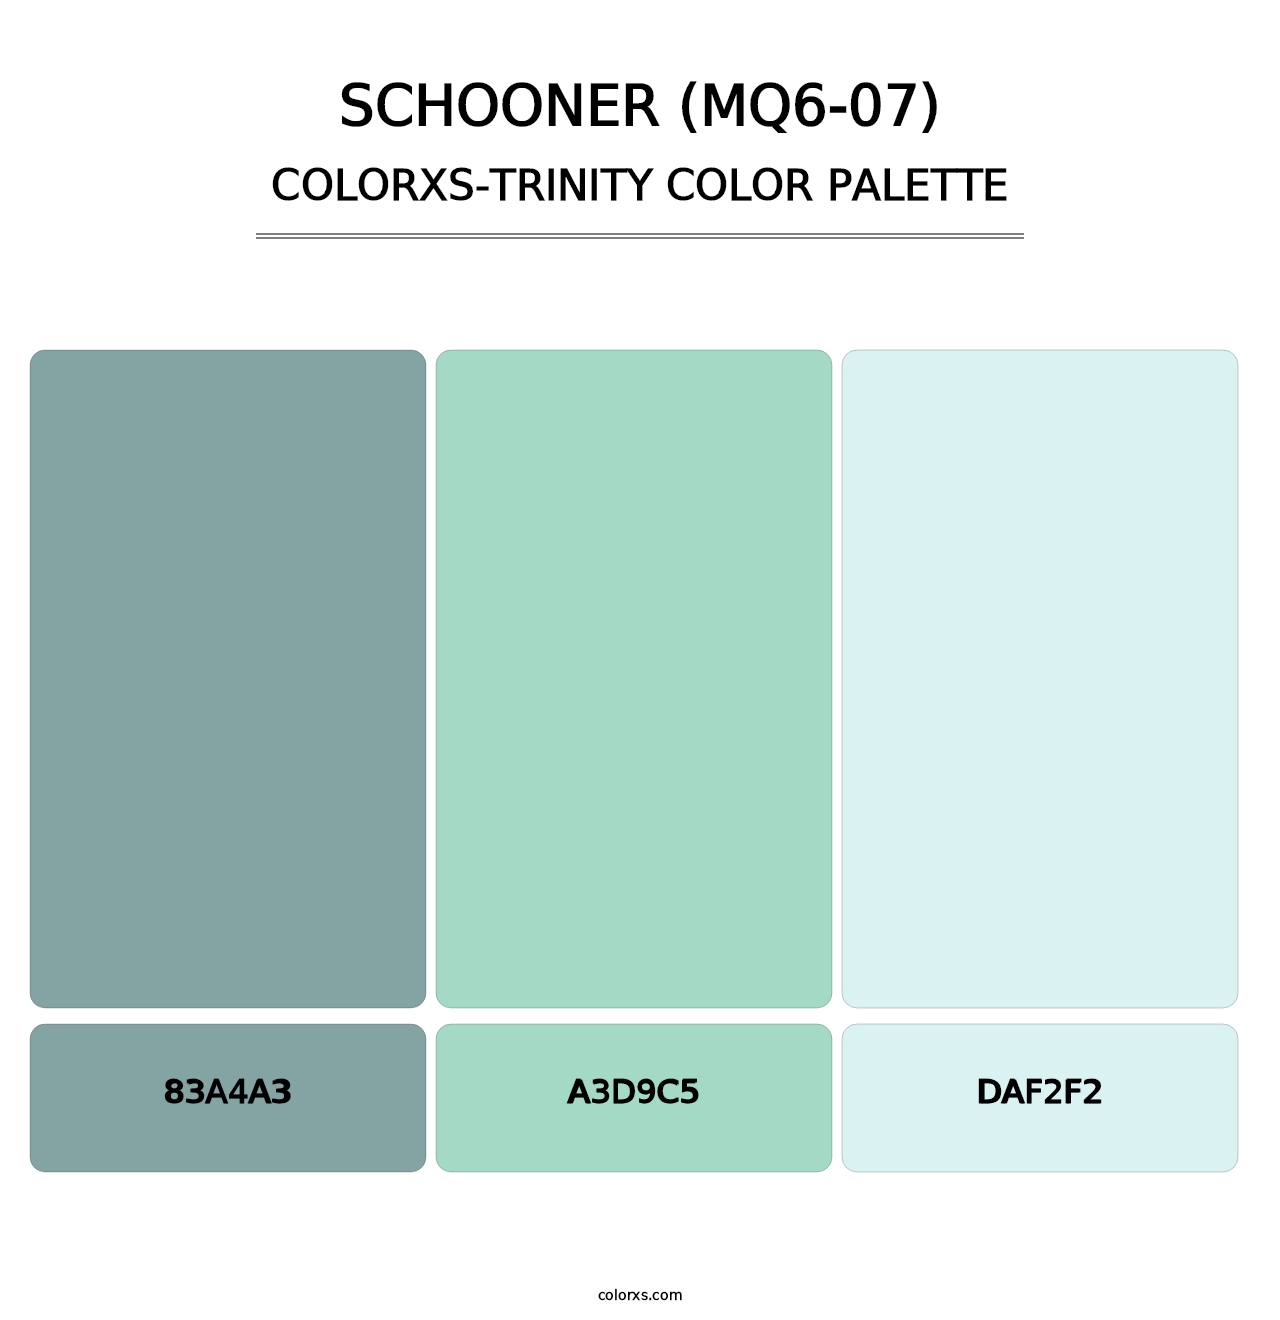 Schooner (MQ6-07) - Colorxs Trinity Palette